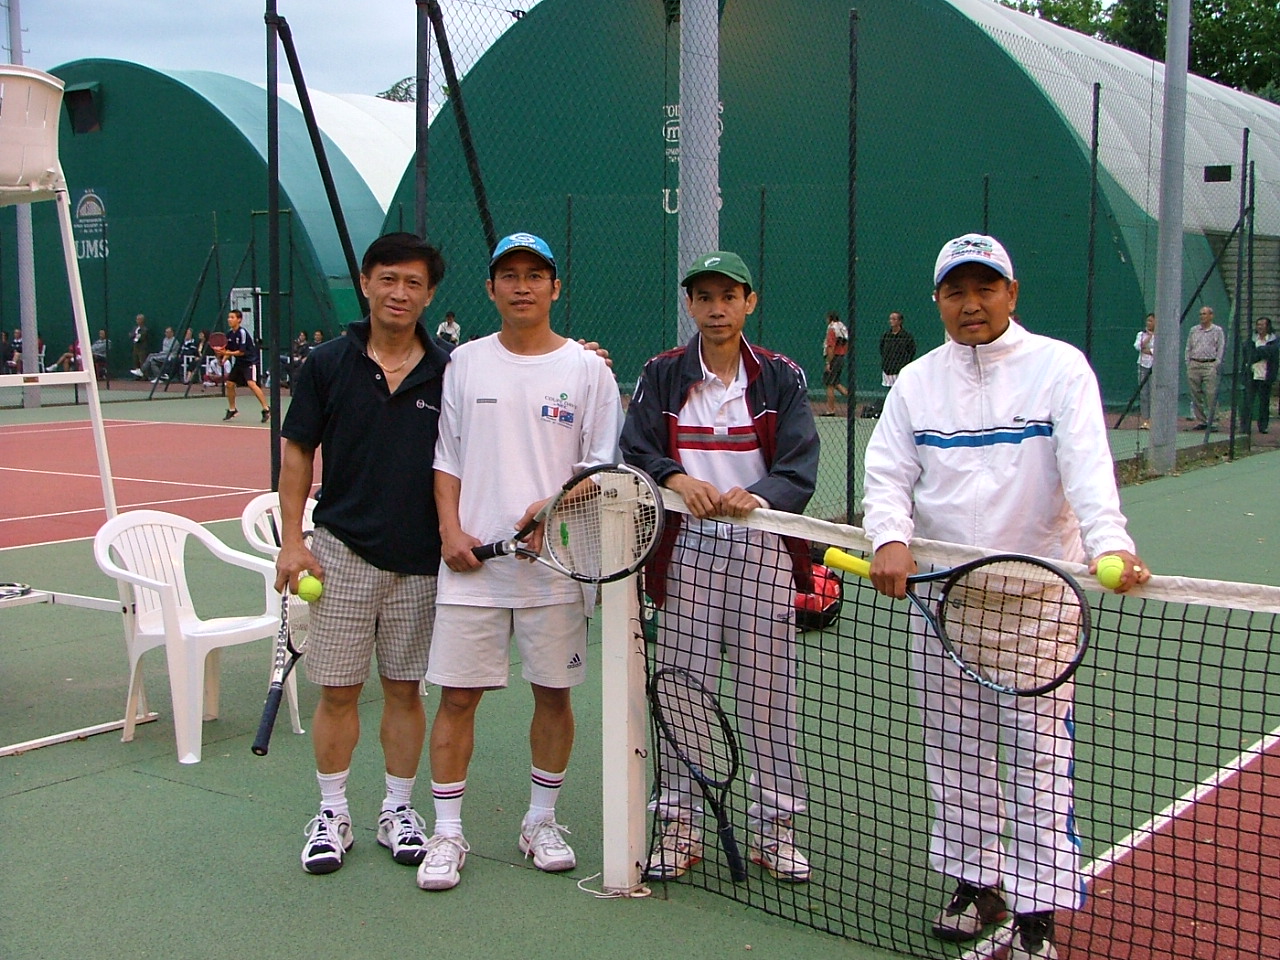 Tournoi-tennislaoParis28072007 109.jpg